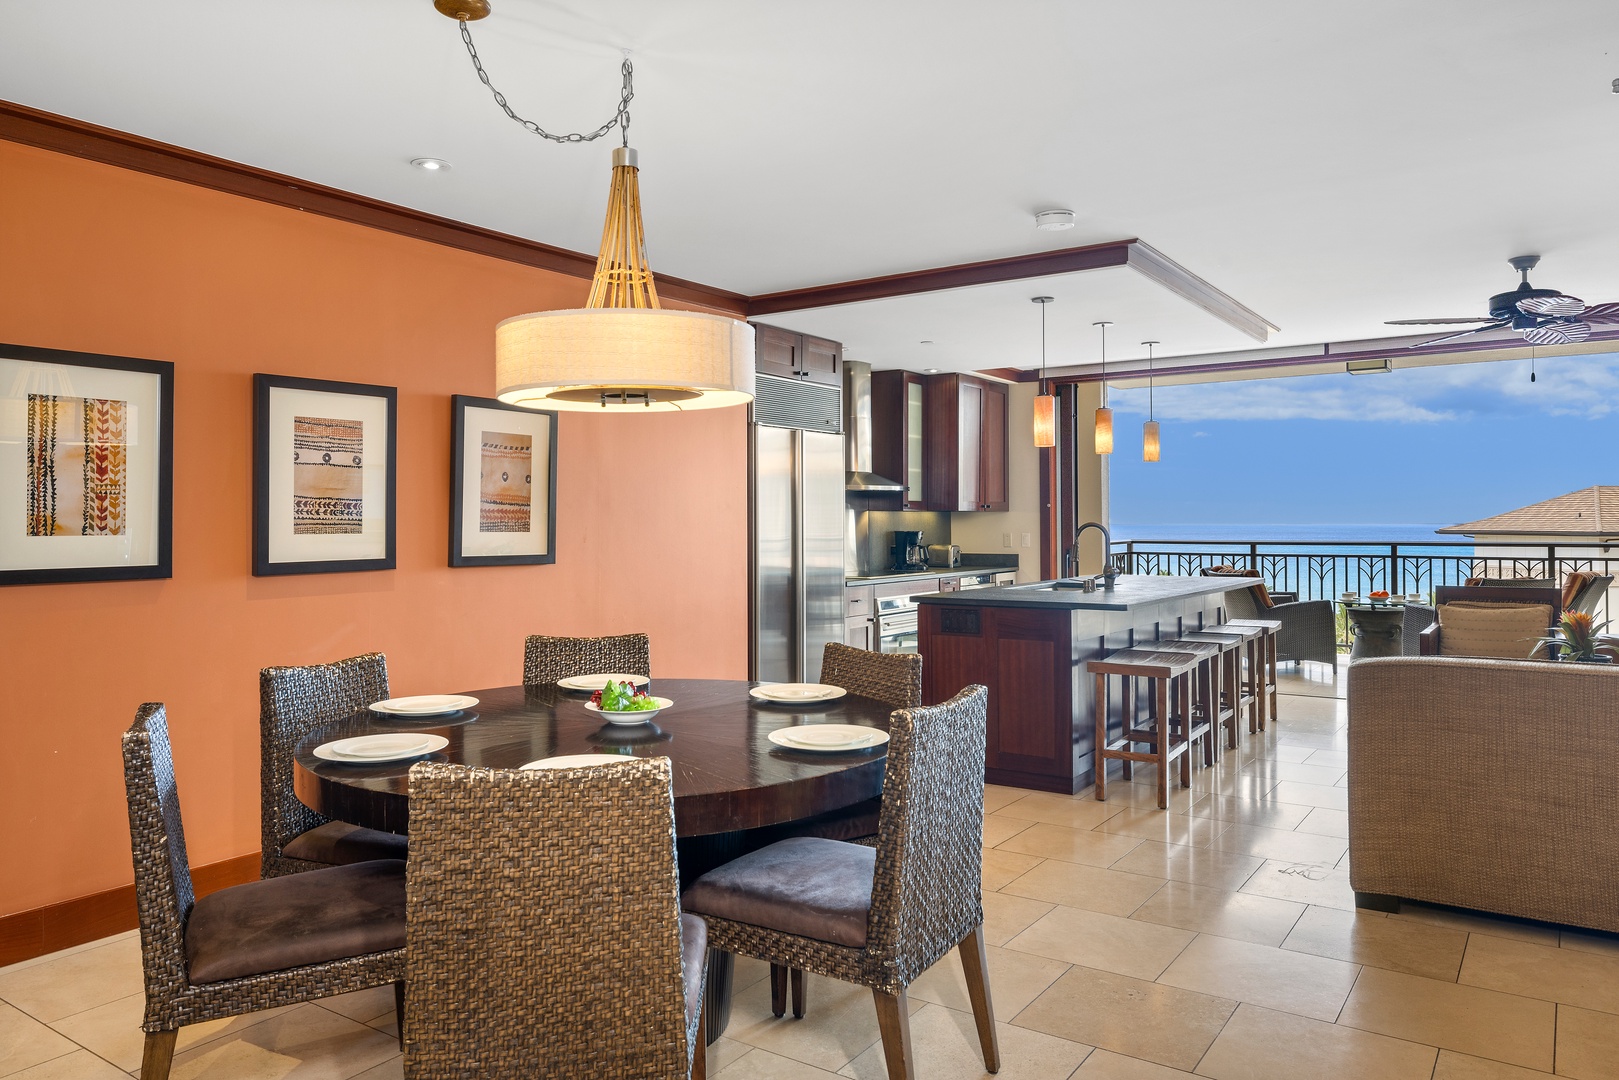 Kapolei Vacation Rentals, Ko Olina Beach Villas O1001 - The dining area and kitchen area are part of an open floor plan.